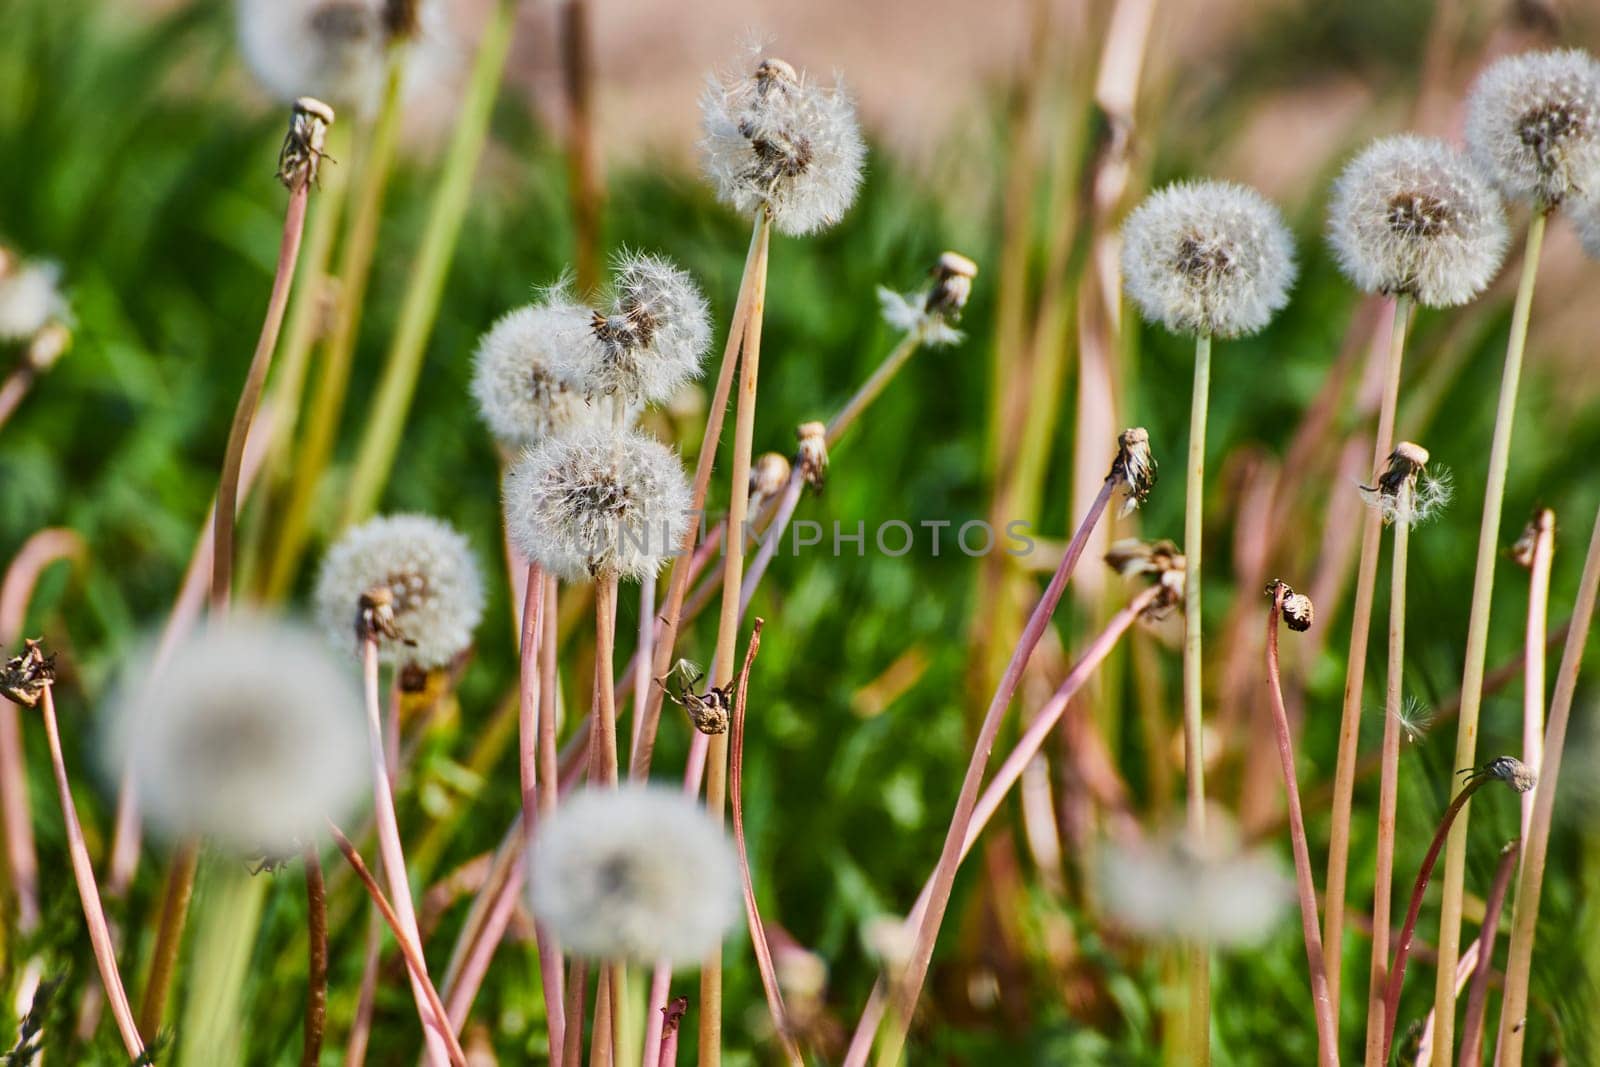 Whispering winds in Fort Wayne: Delicate dandelion clocks poised for renewal in a serene meadow.